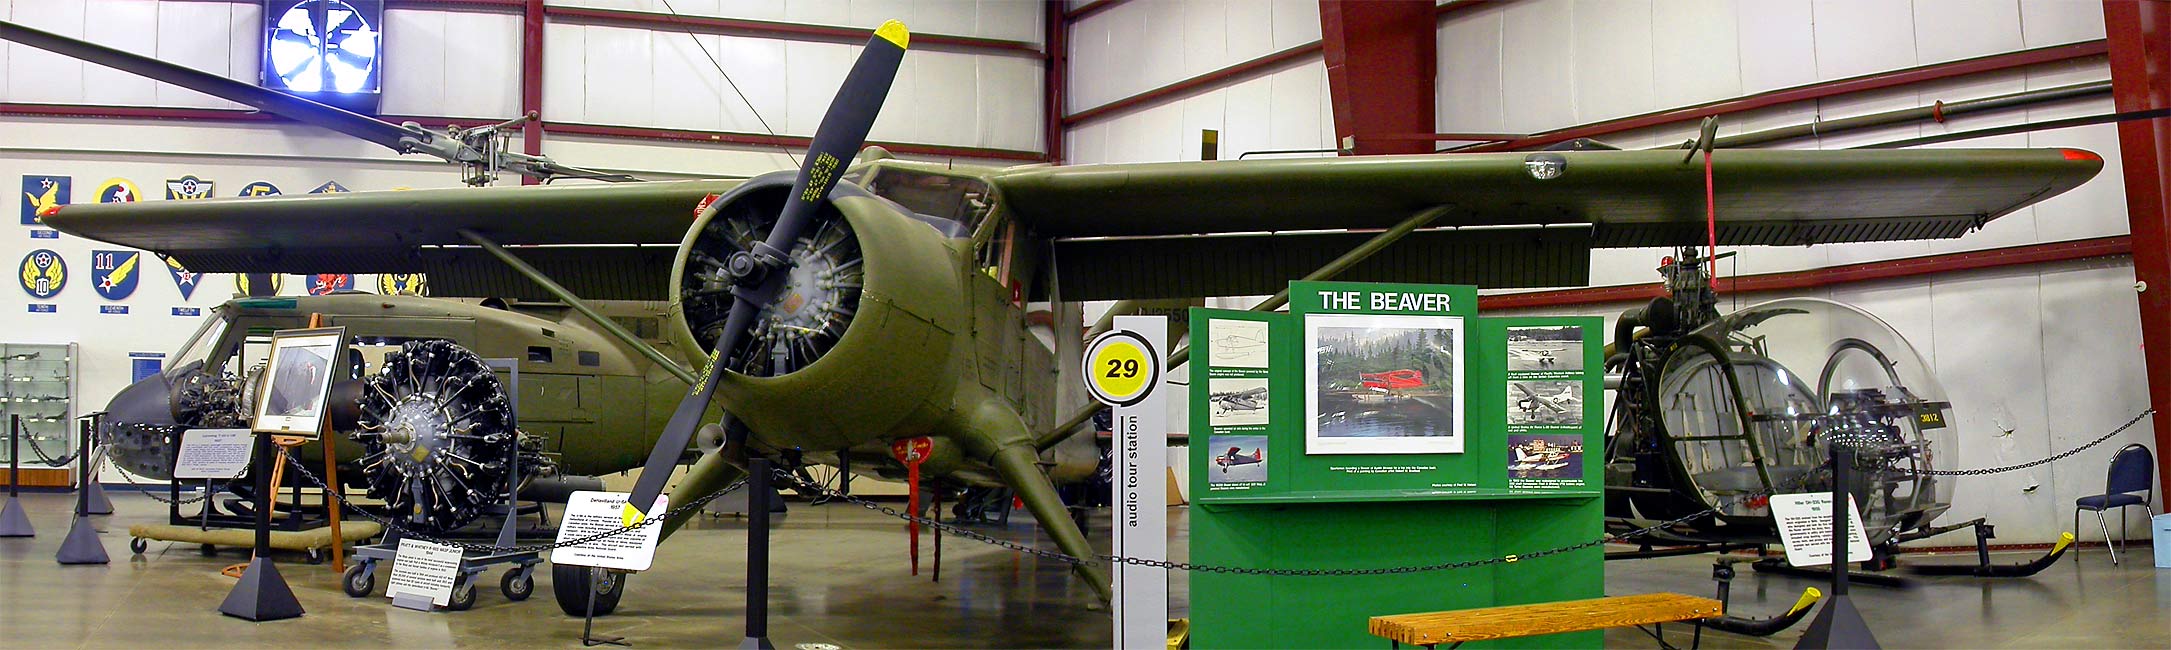 DeHavilland Beaver STOL Plane at the New England Air Museum